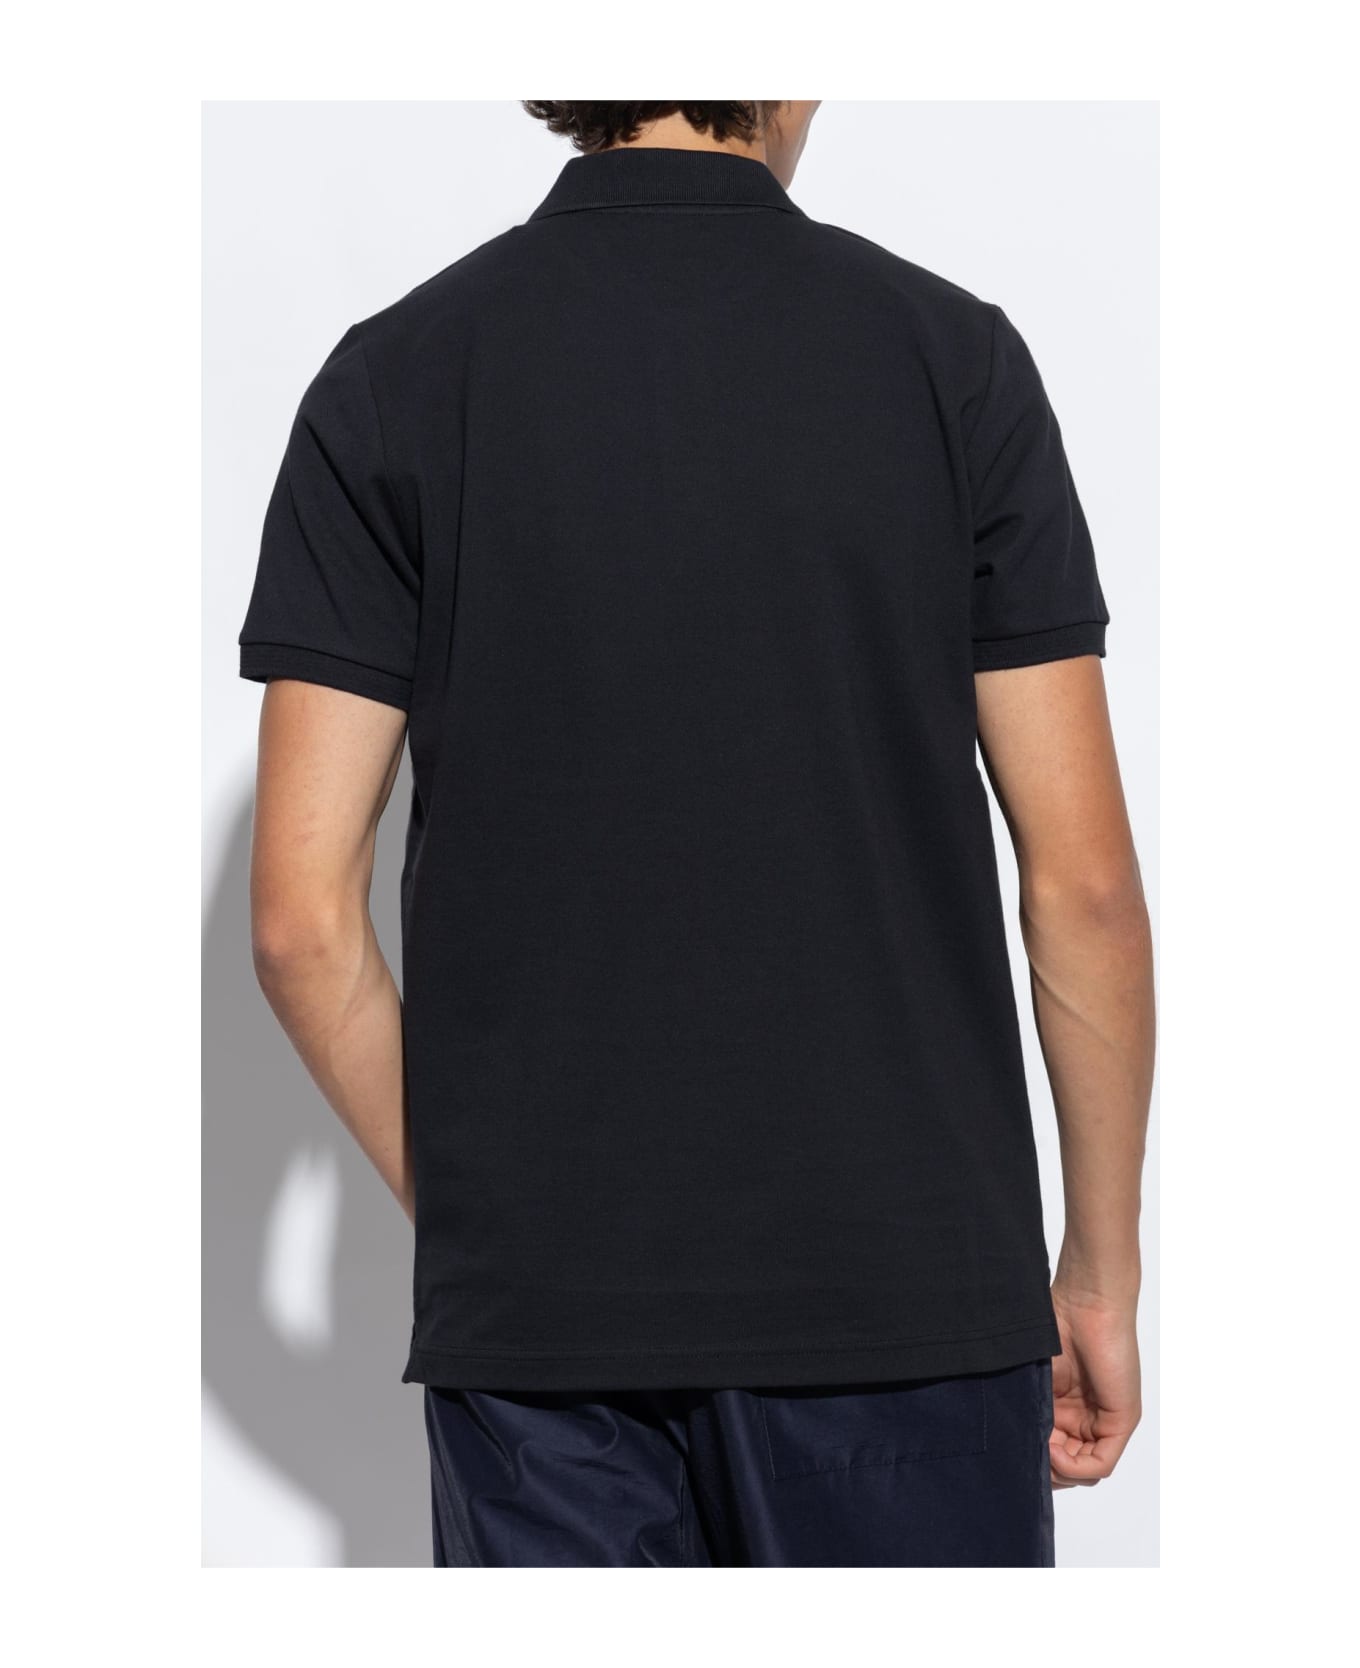 Iceberg Polo Shirt With Logo - BLACK ポロシャツ